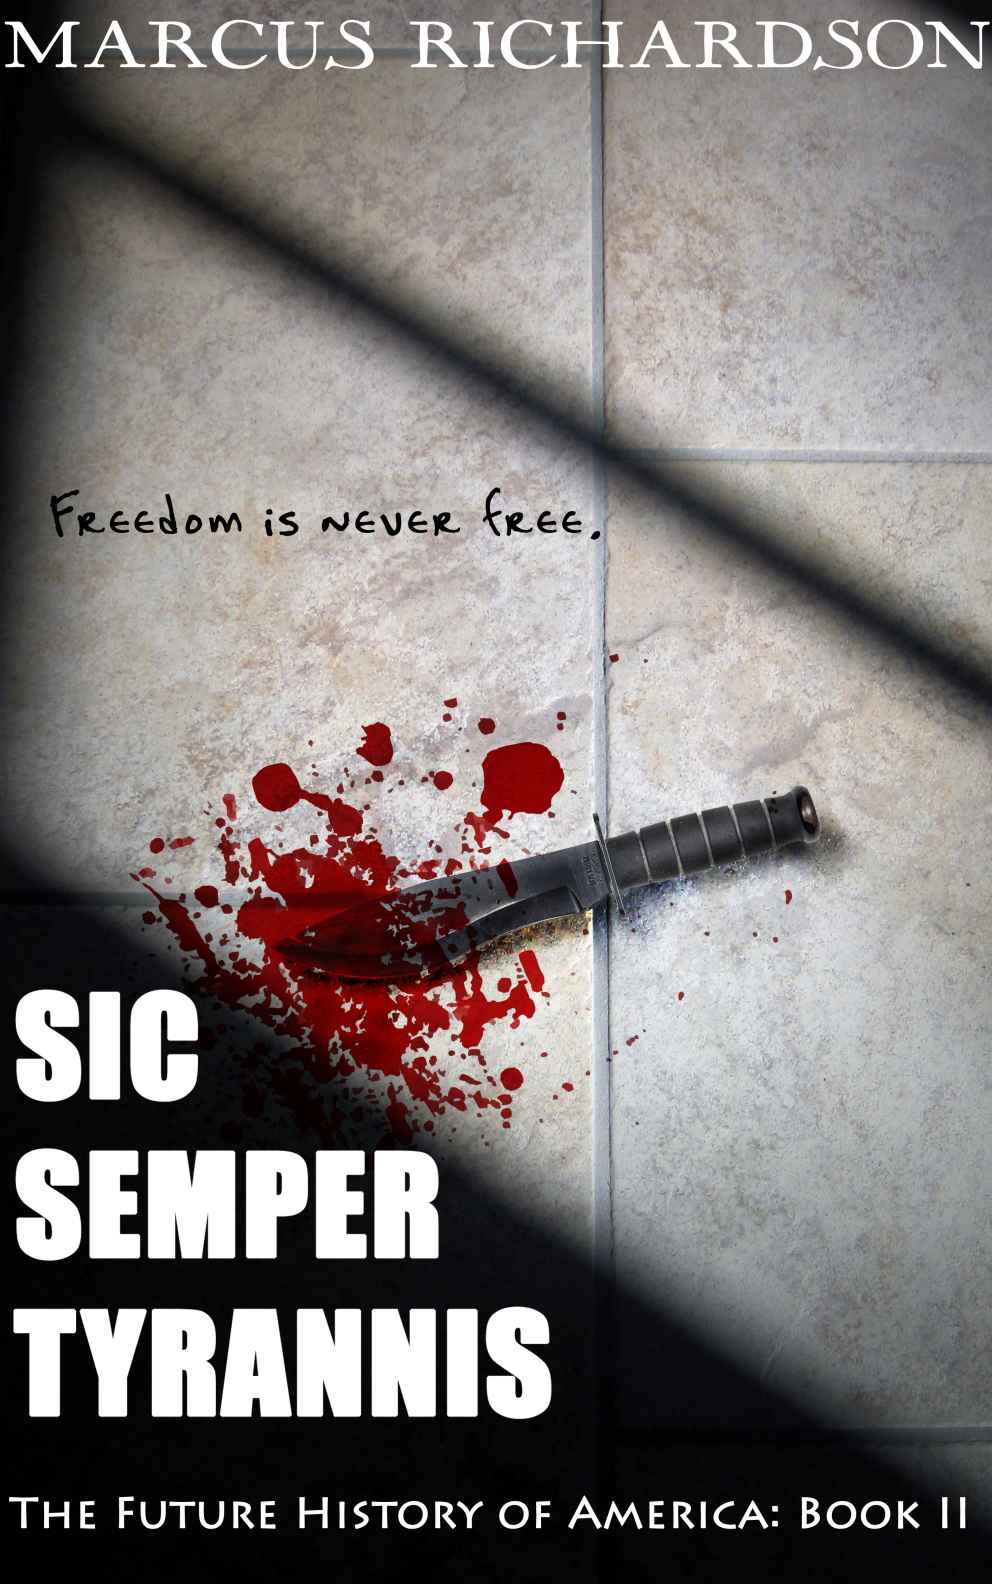 Sic Semper Tyrannis by Marcus Richardson